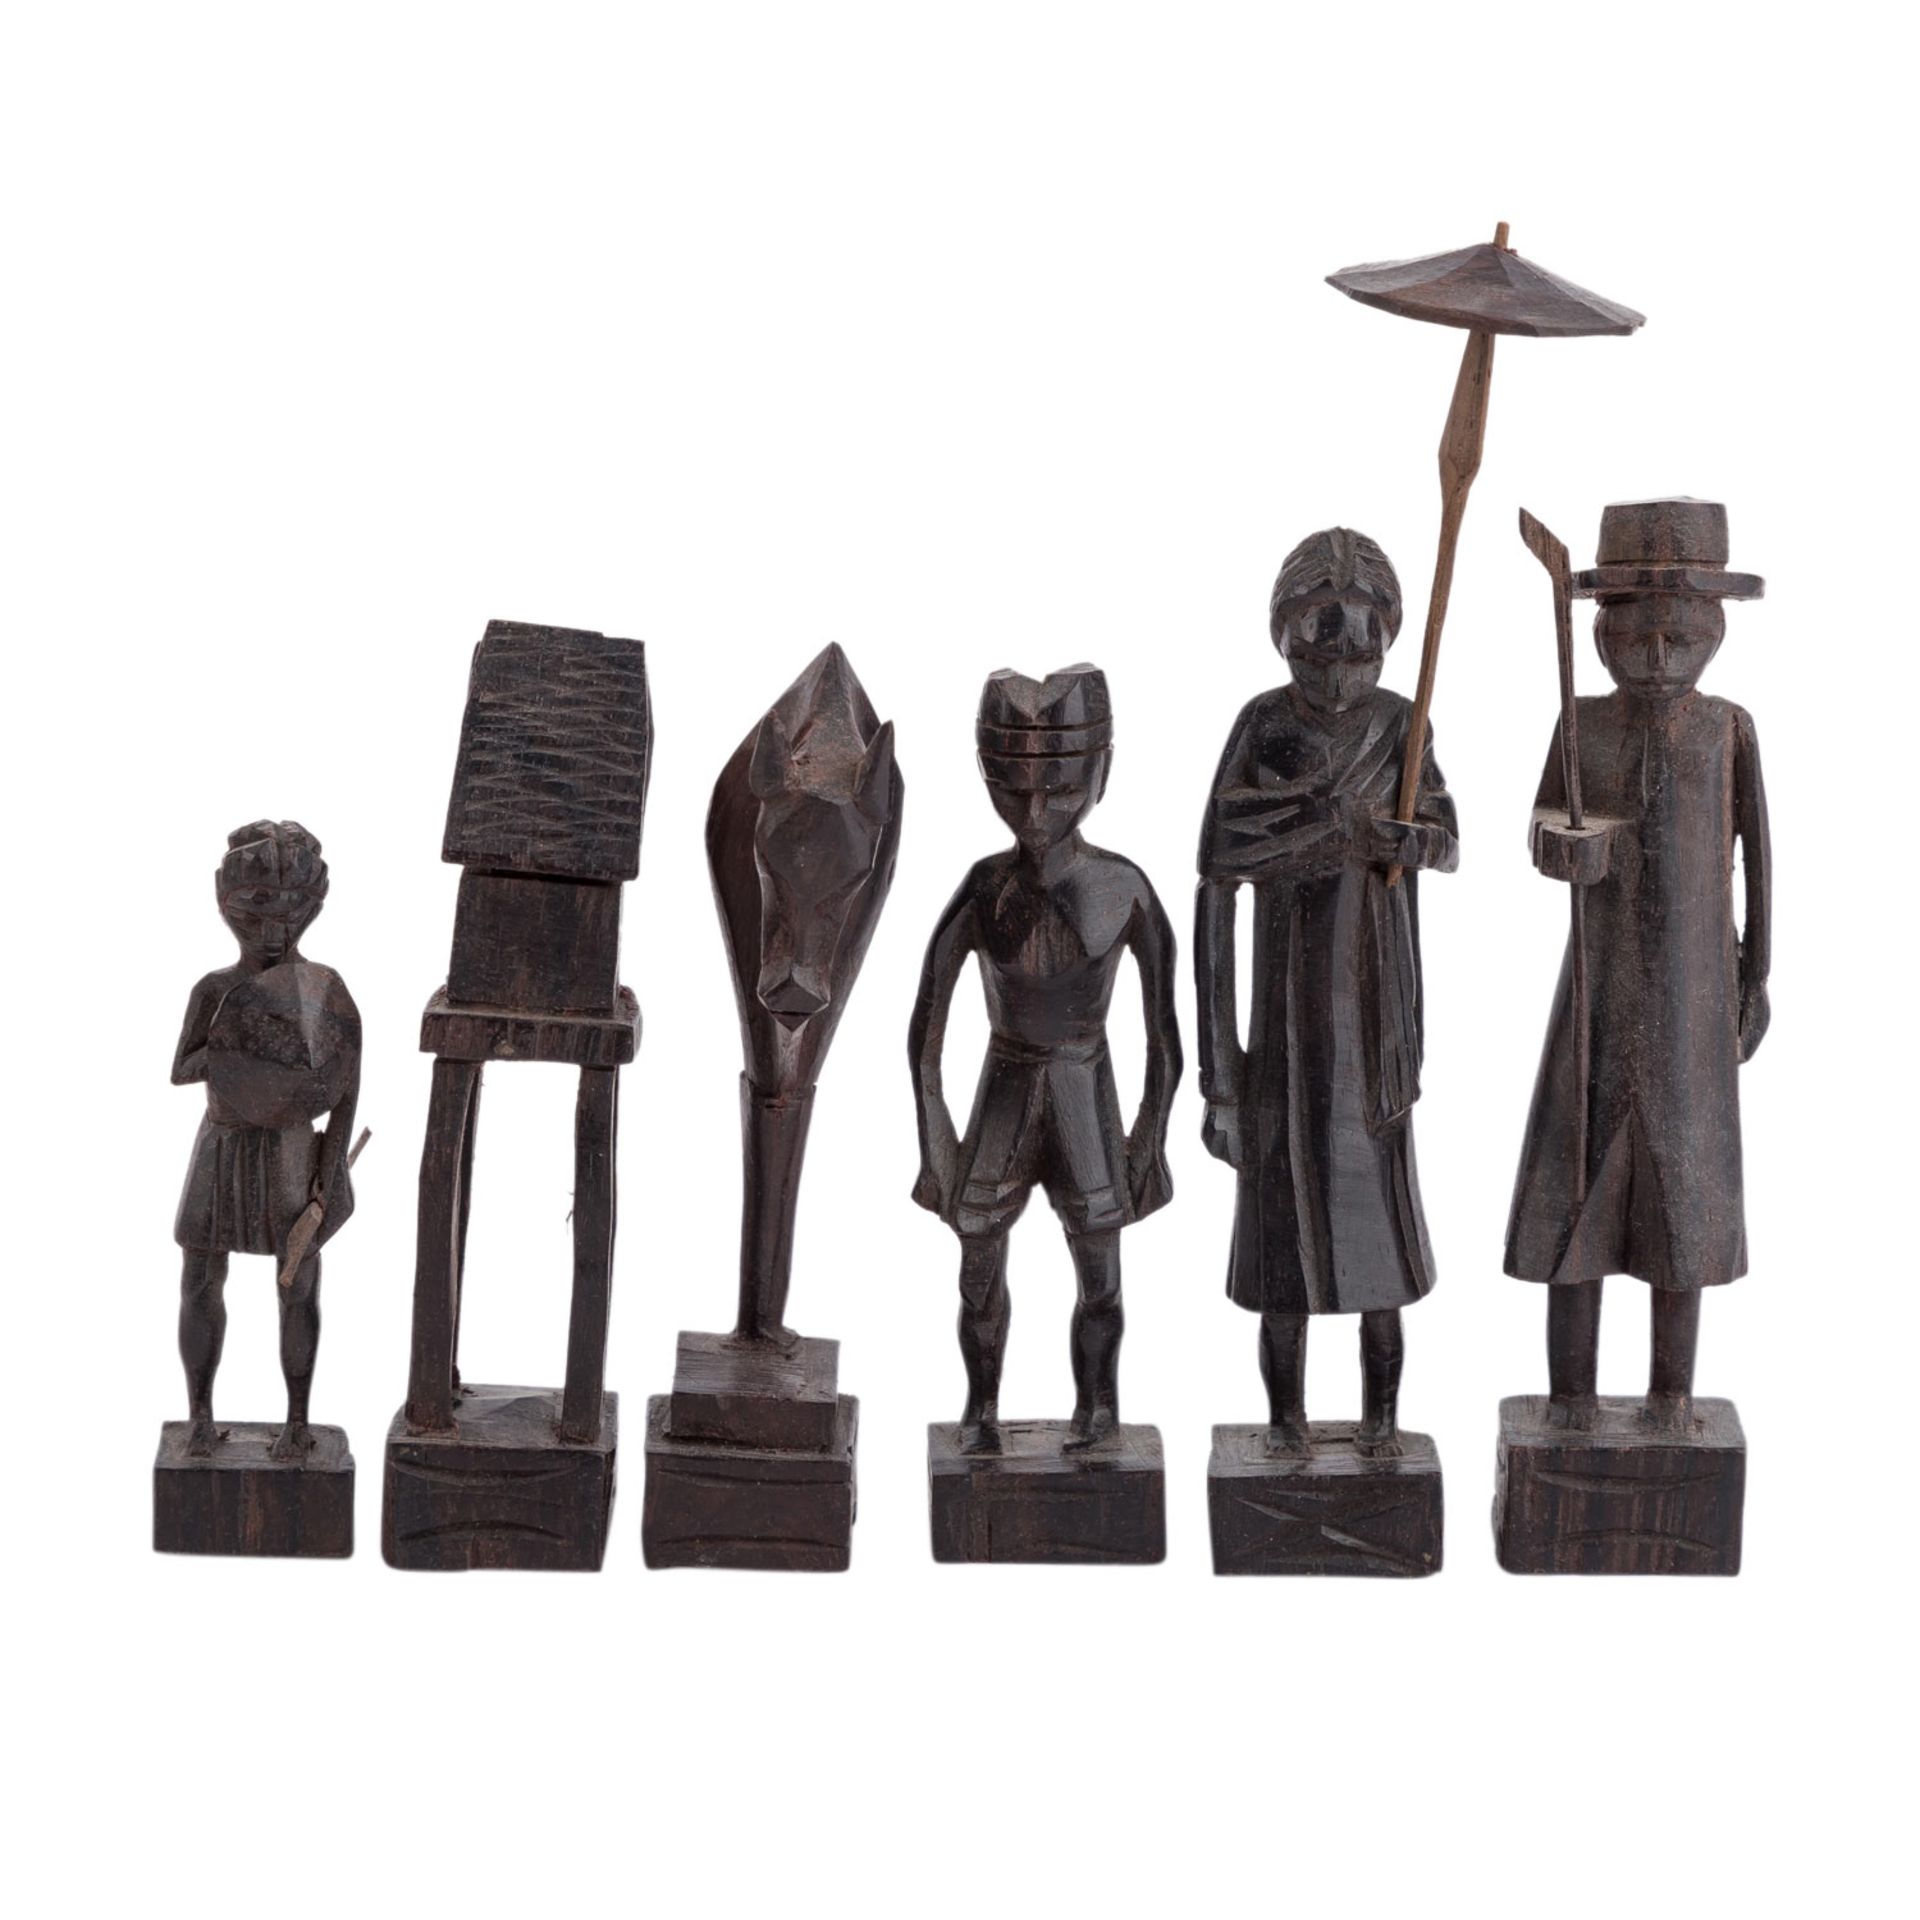 AFRIKANISCHER SCHACHFIGURENSATZGeschnitzte Figuren aus Eben- bzw. Tropenholz. Figurenhöhe bis 15 cm. - Bild 3 aus 3